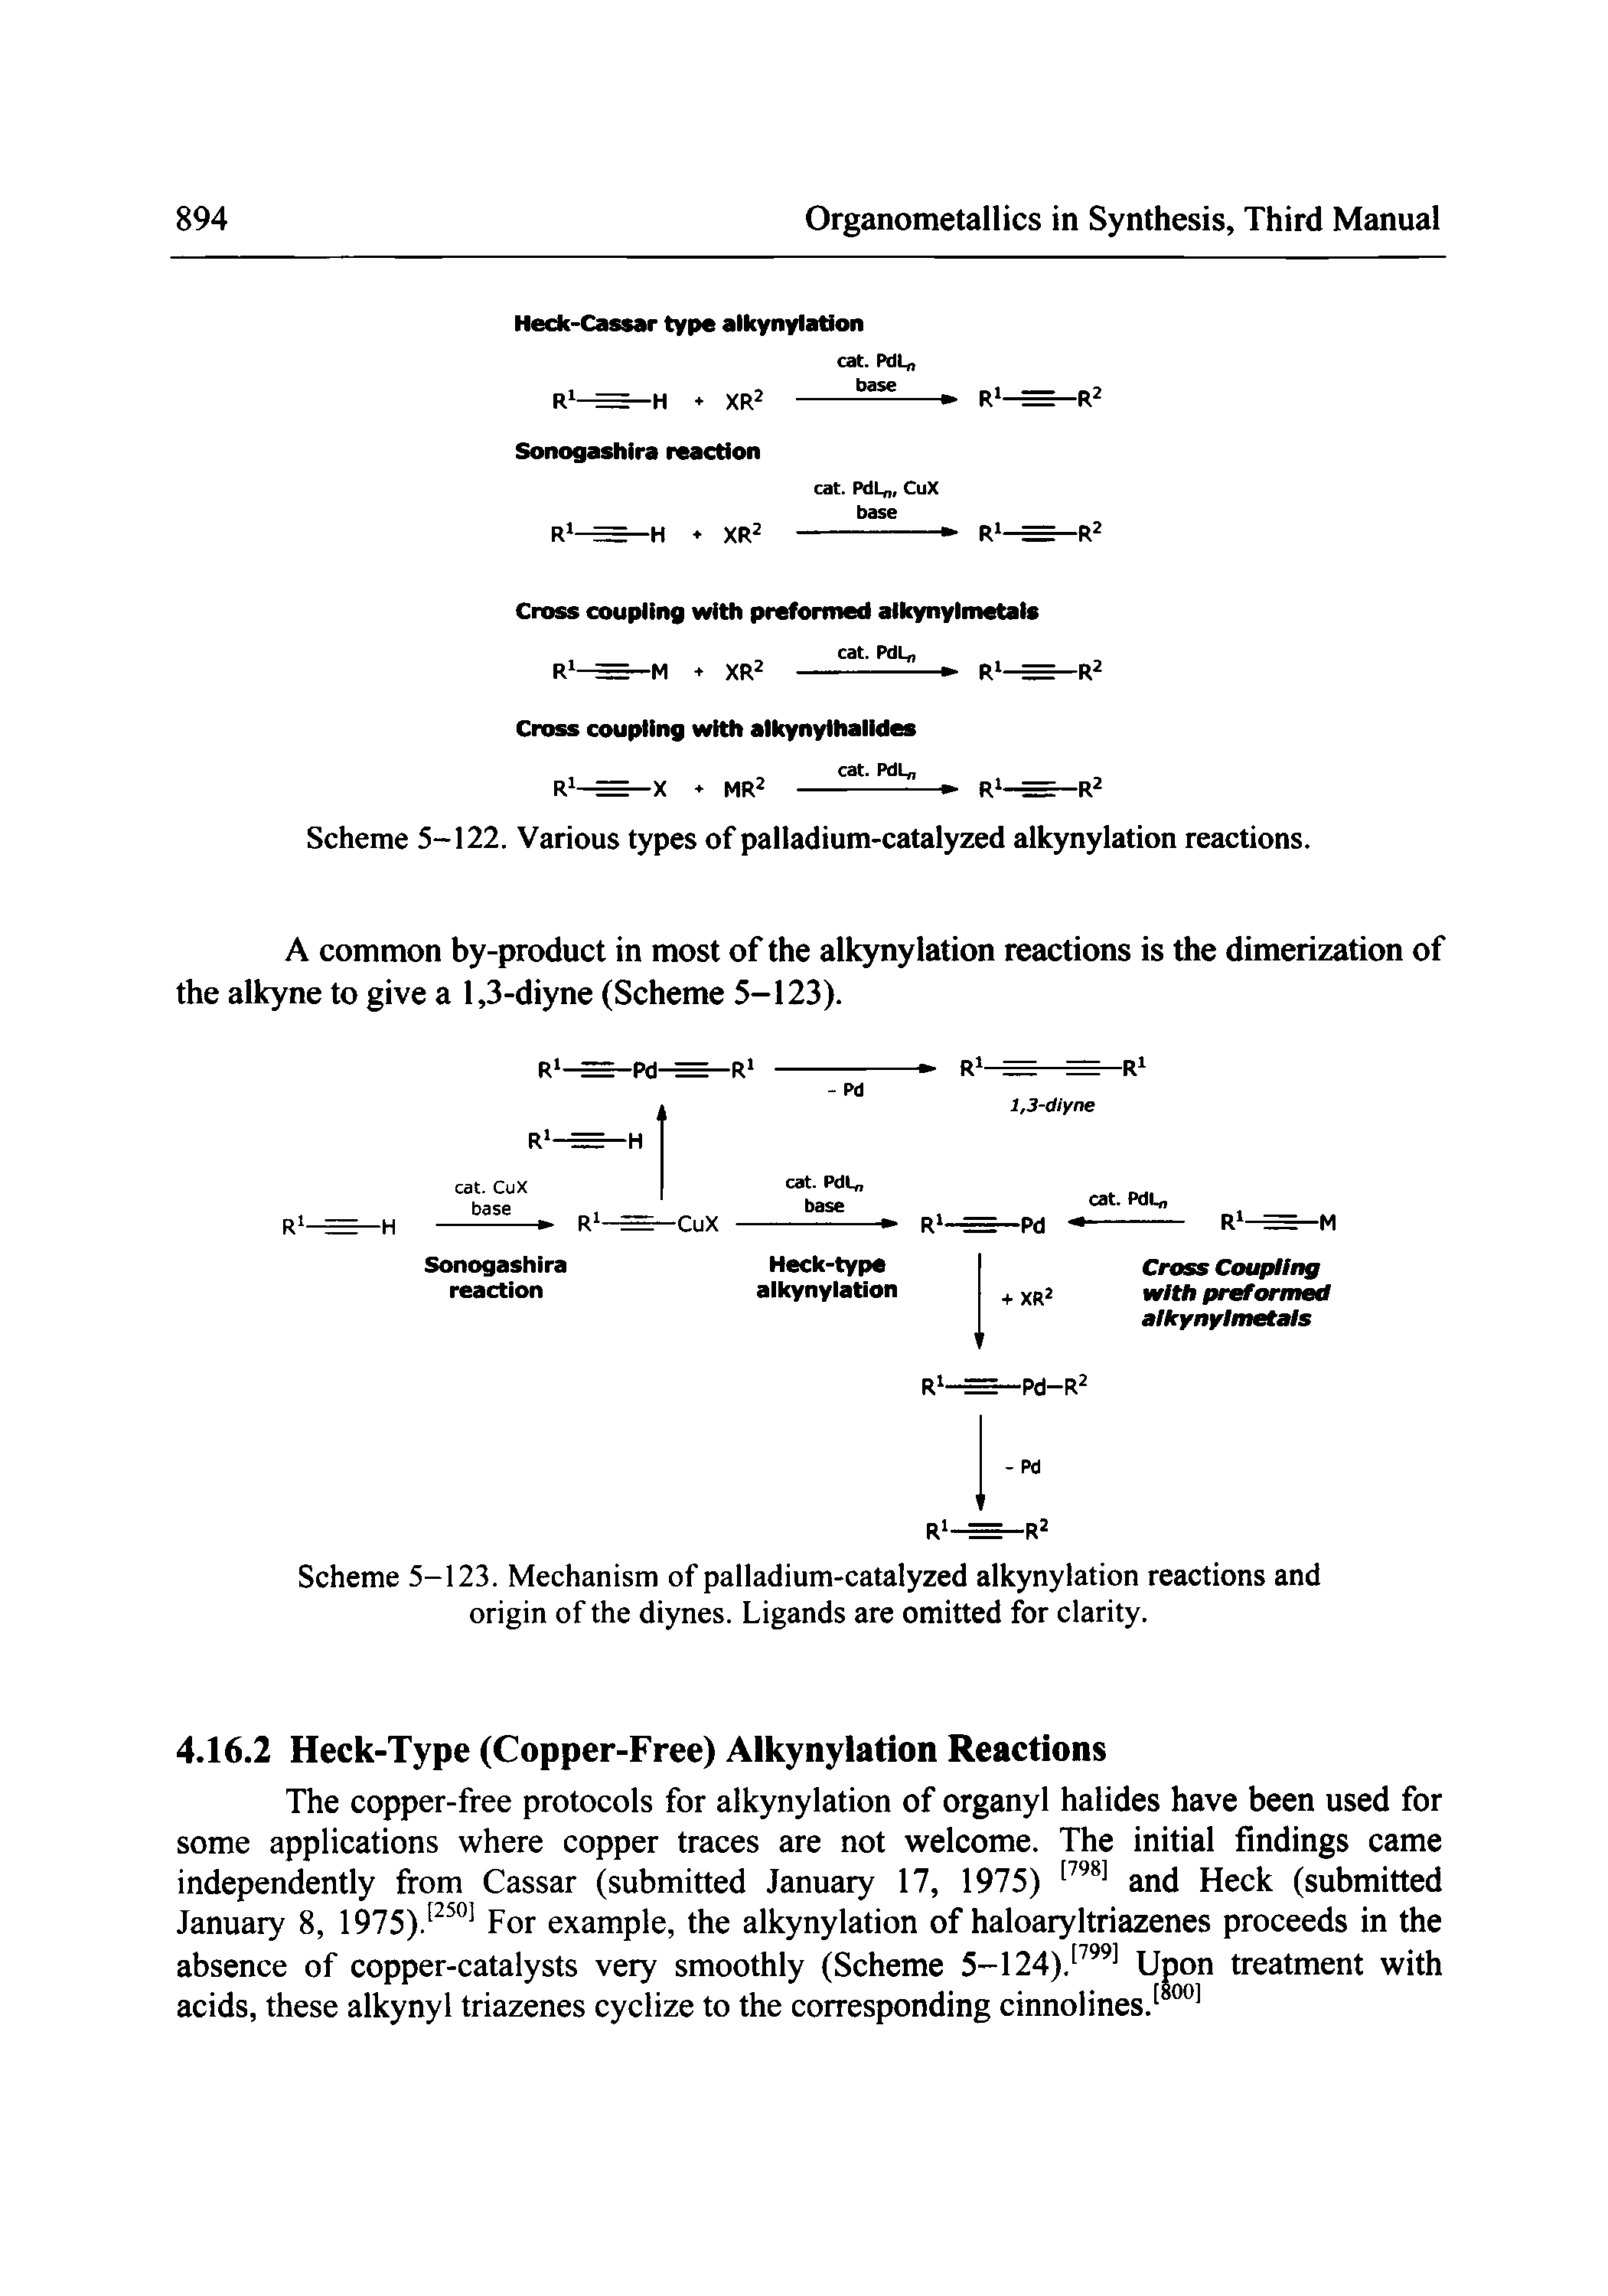 Scheme 5-122. Various types of palladium-catalyzed alkynylation reactions.